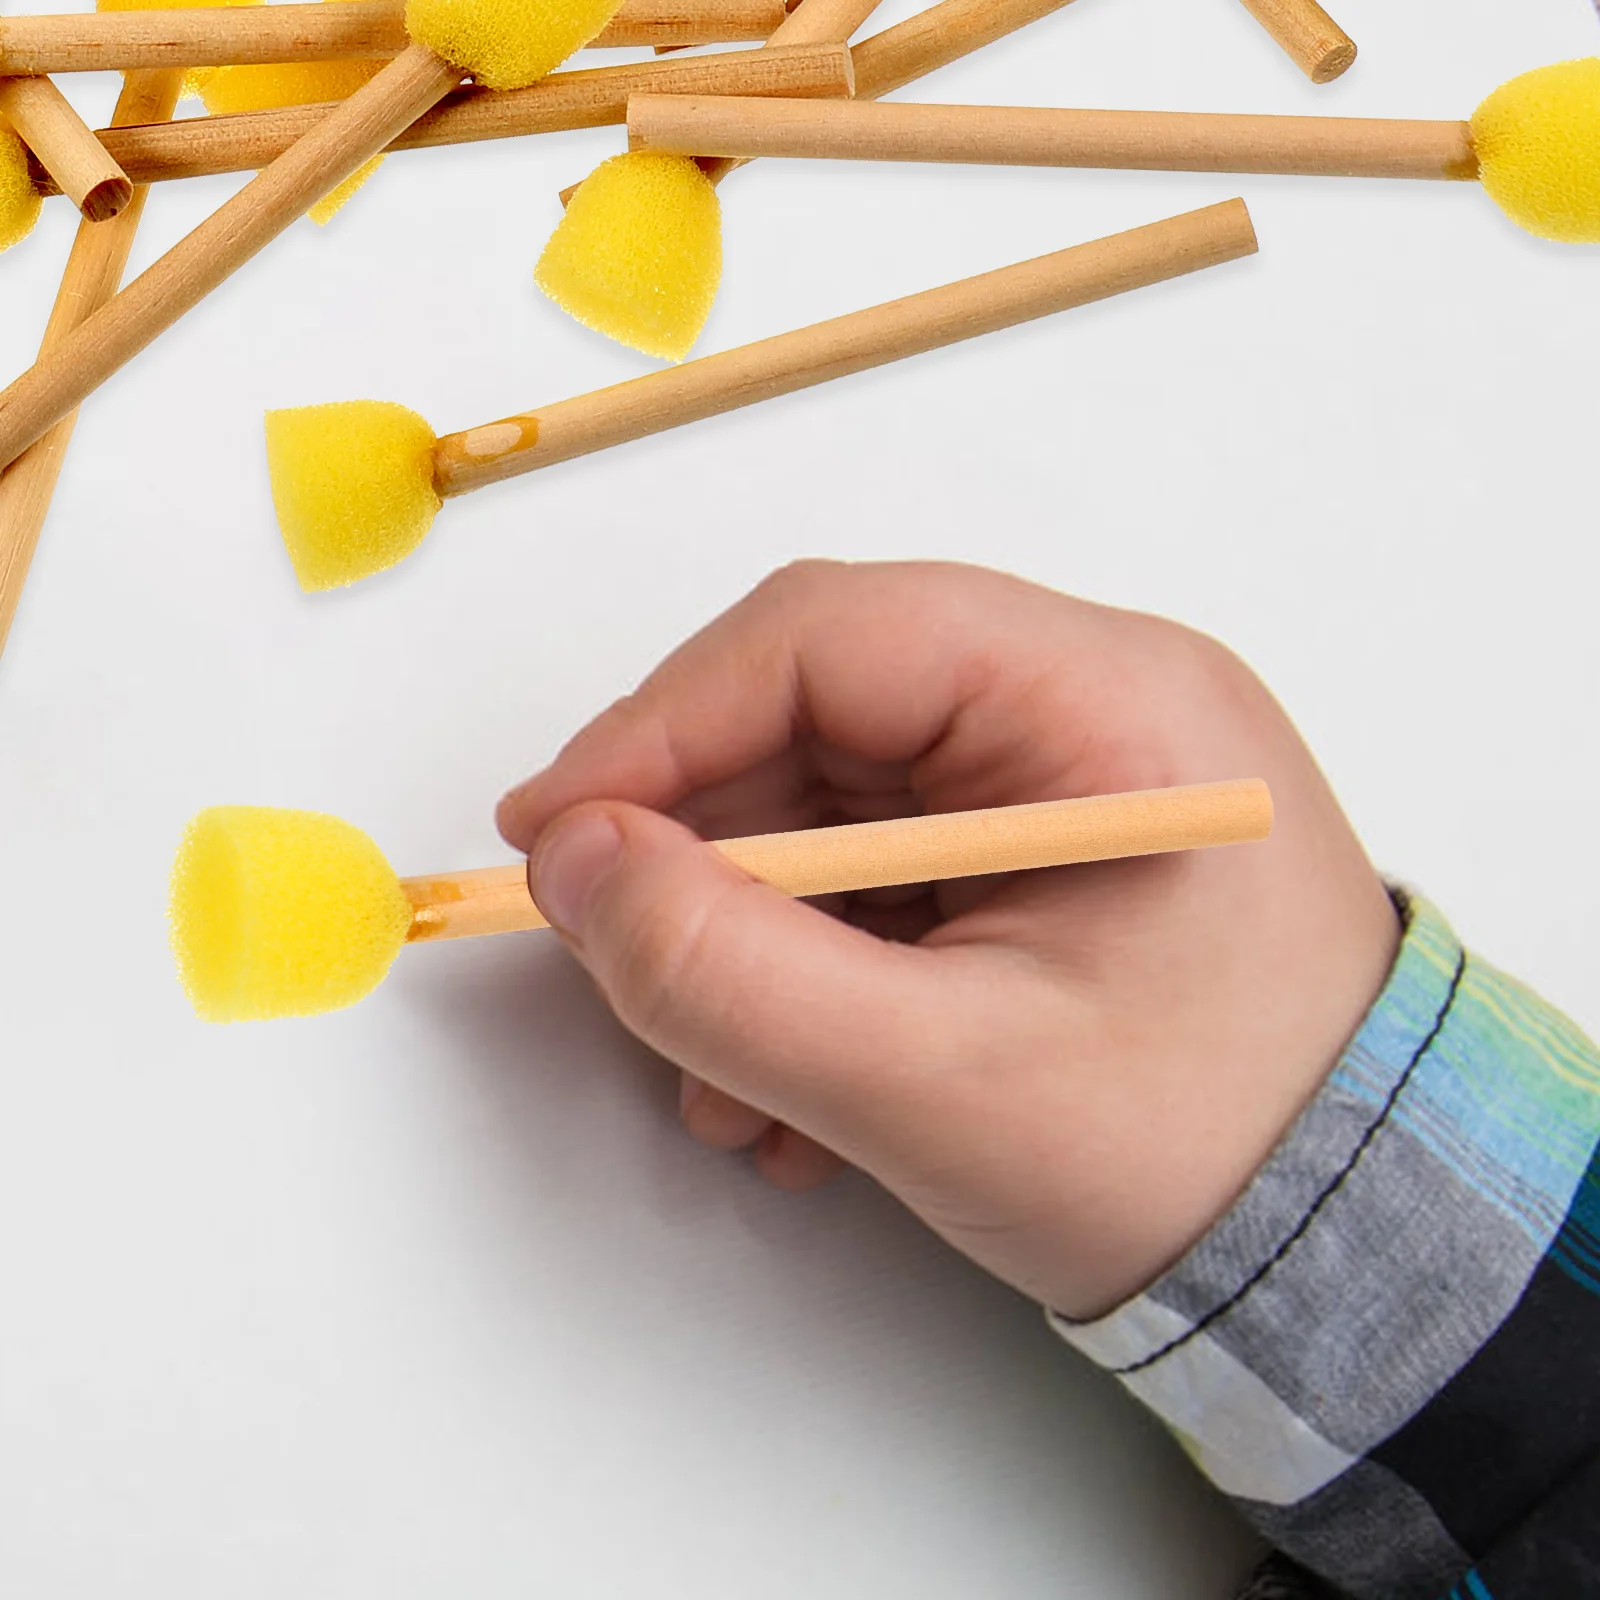 100 Pcs Sponge Brush Wooden Handle Foam Brushes Yellow Paint Pen Graffiti Painting Kids